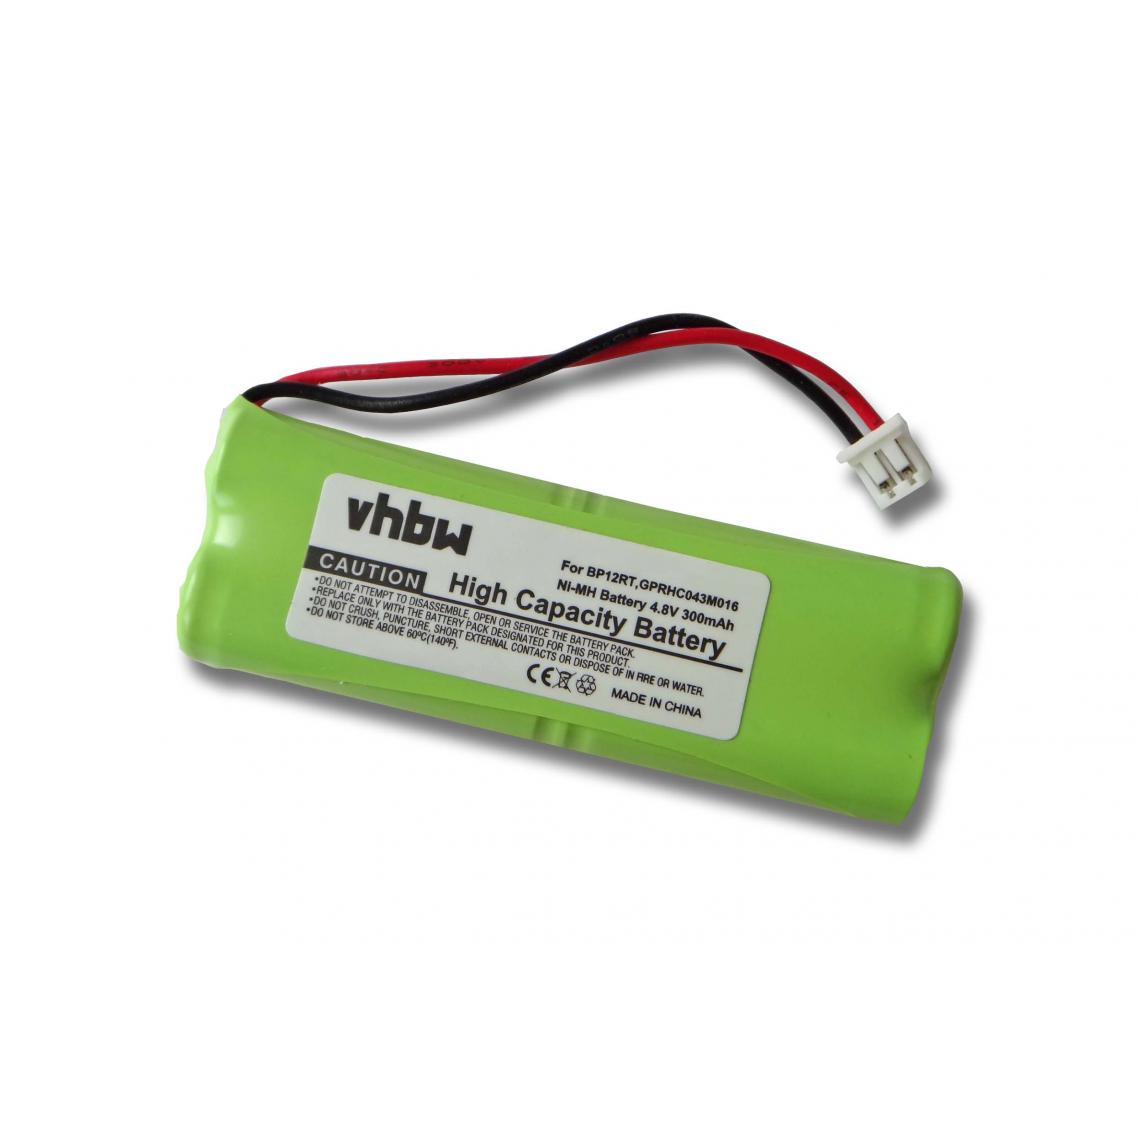 Vhbw - vhbw batterie compatible avec Dogtra 1900NCP Transmitter, 1900 Receiver, 1902NCP Transmitter collier de dressage (300mAh, 4,8V, NiMH) - Collier pour chien